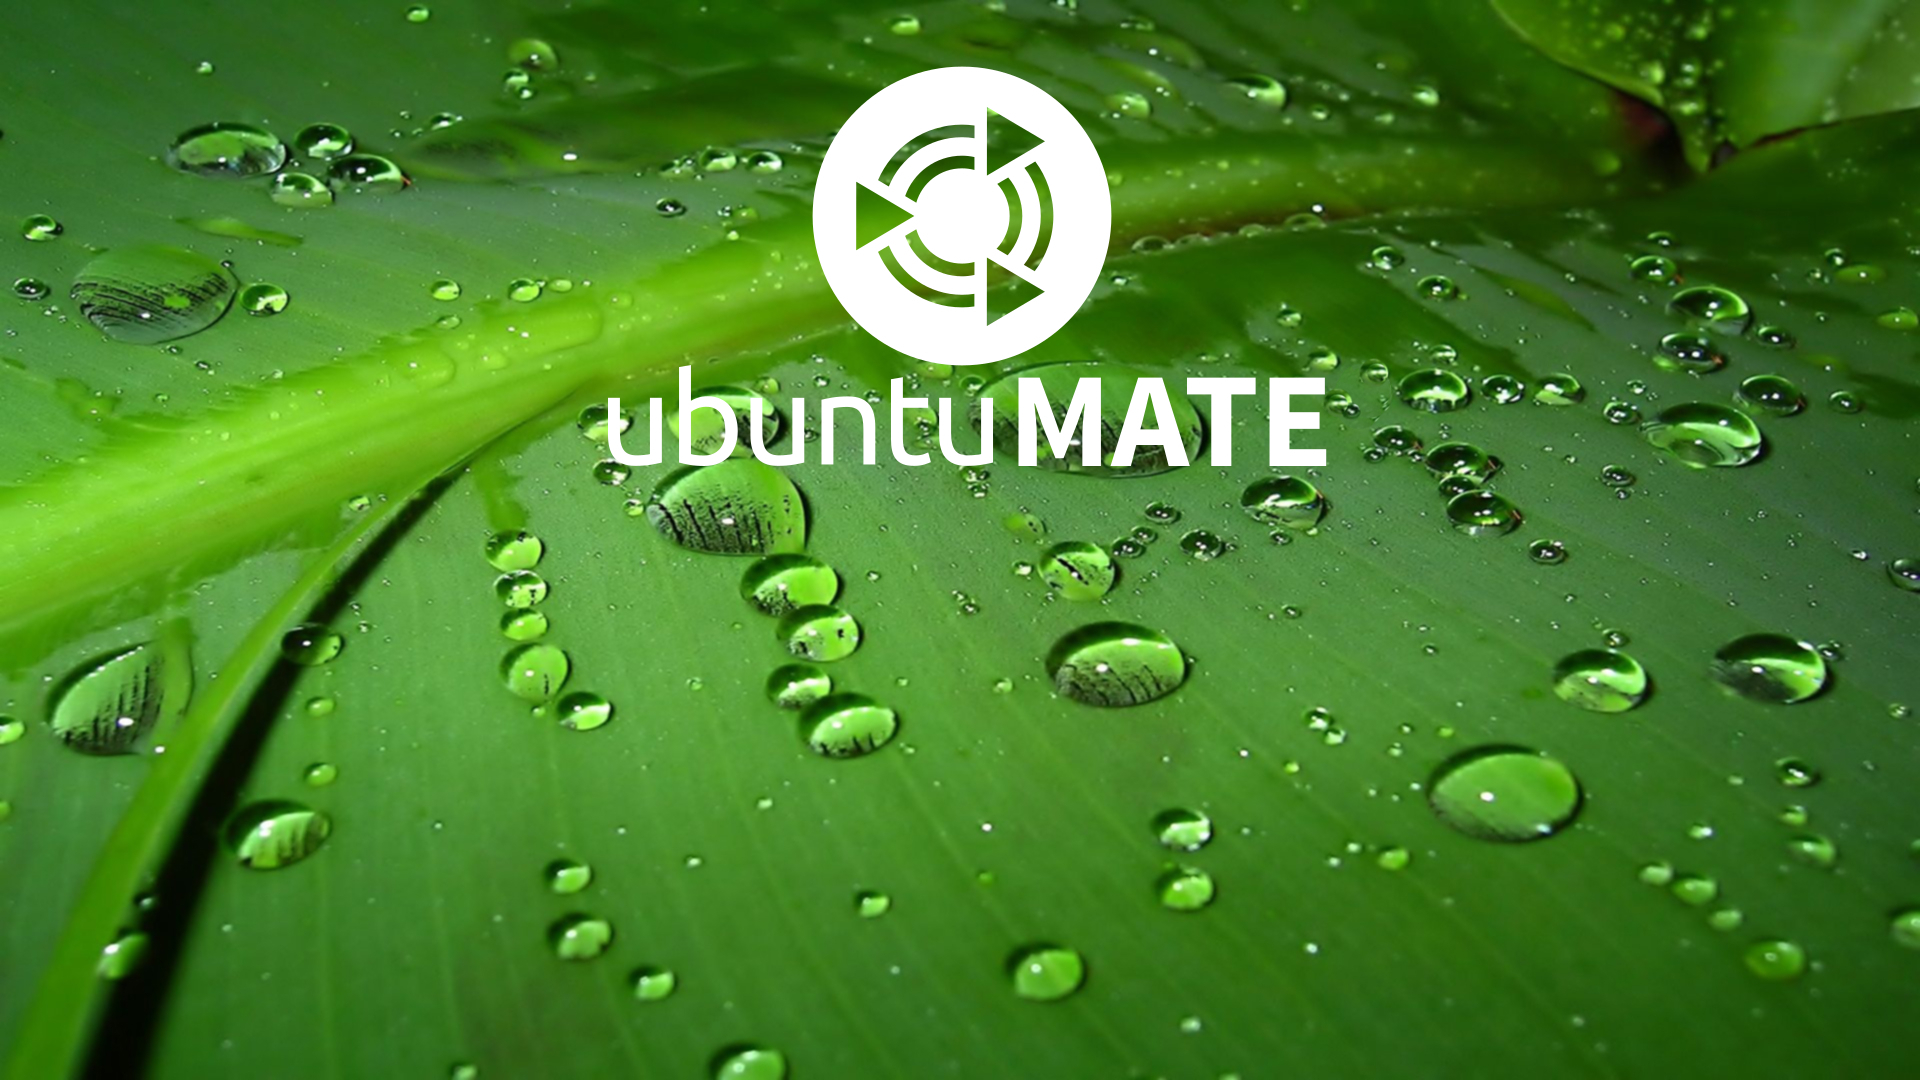 Some Ubuntumate Wallpaper Ubuntu Mate Munity